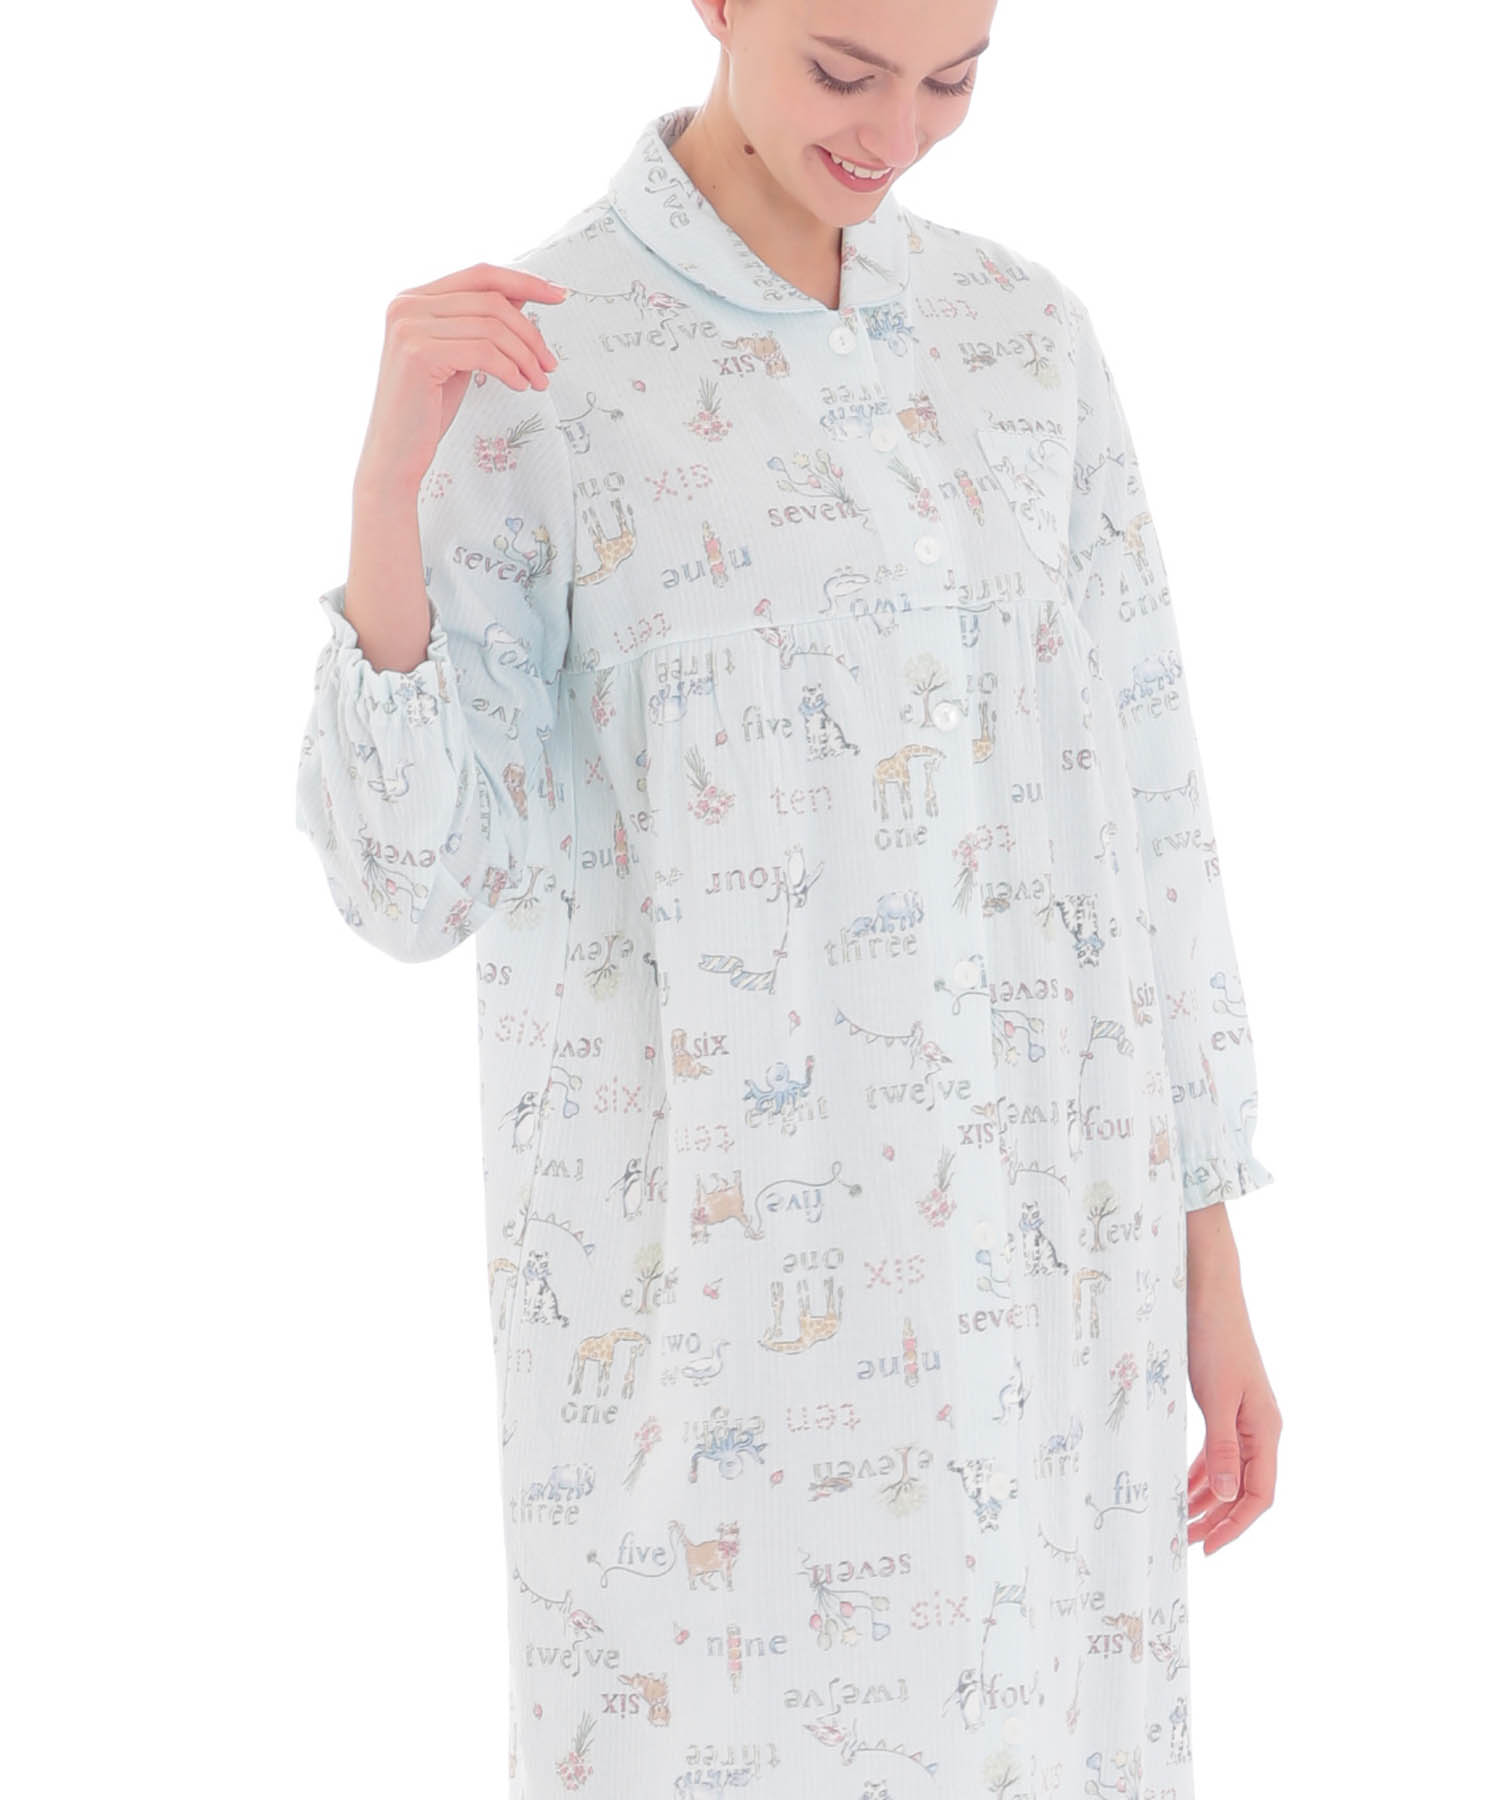 Moon Tanのパジャマ ワンピース・ネグリジェ｜ナルエー公式通販サイト